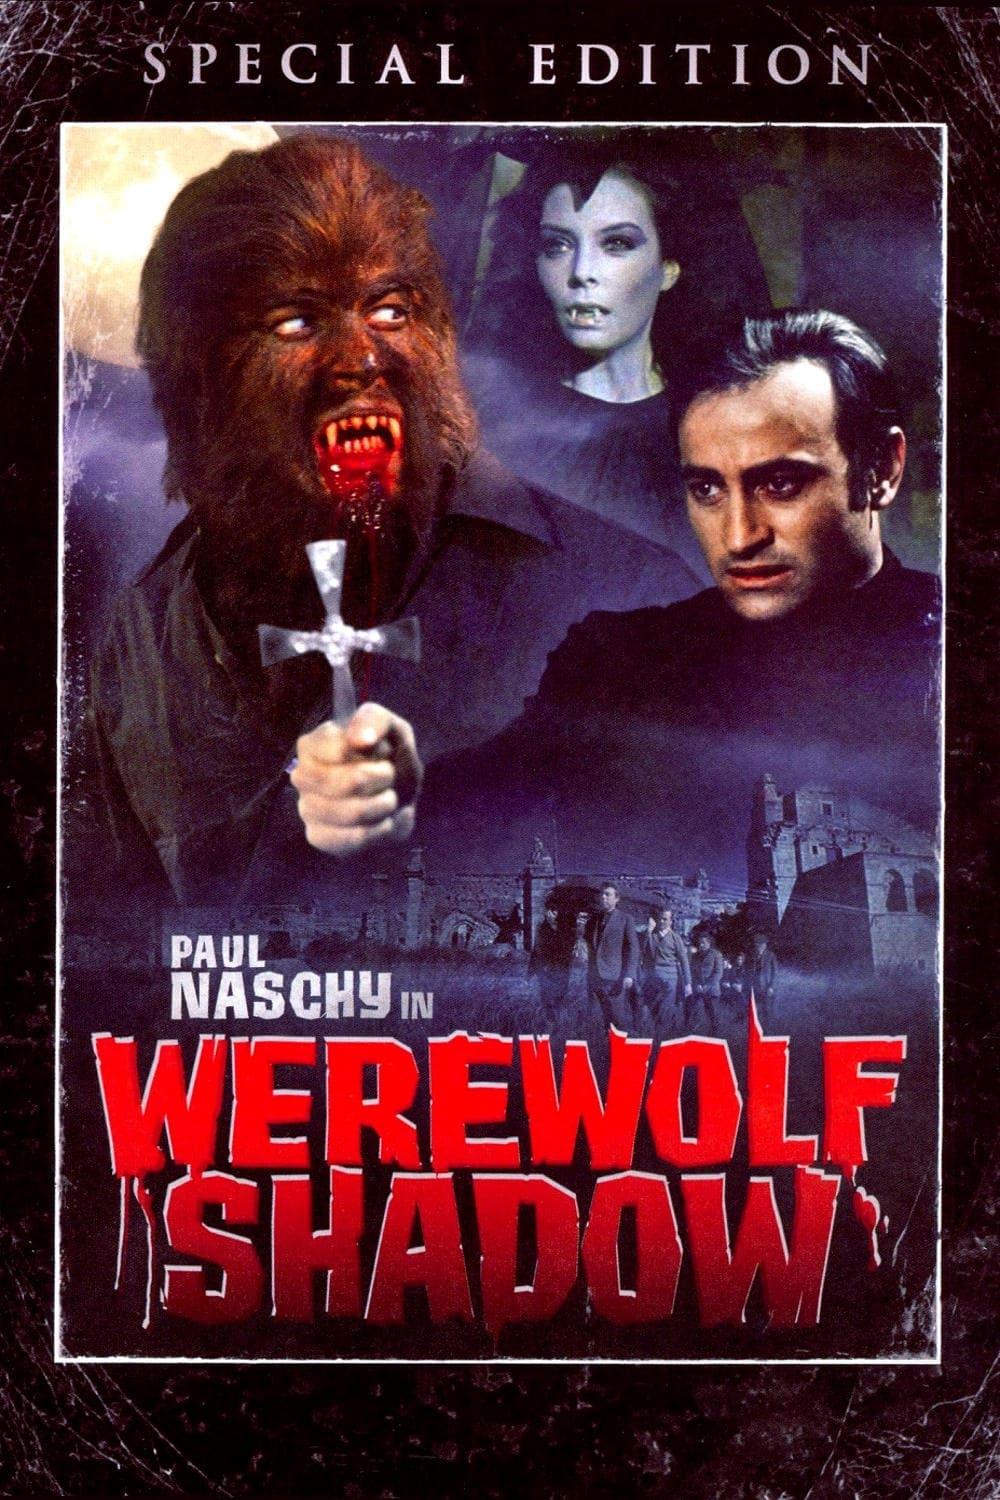 The Werewolf Versus the Vampire Woman poster